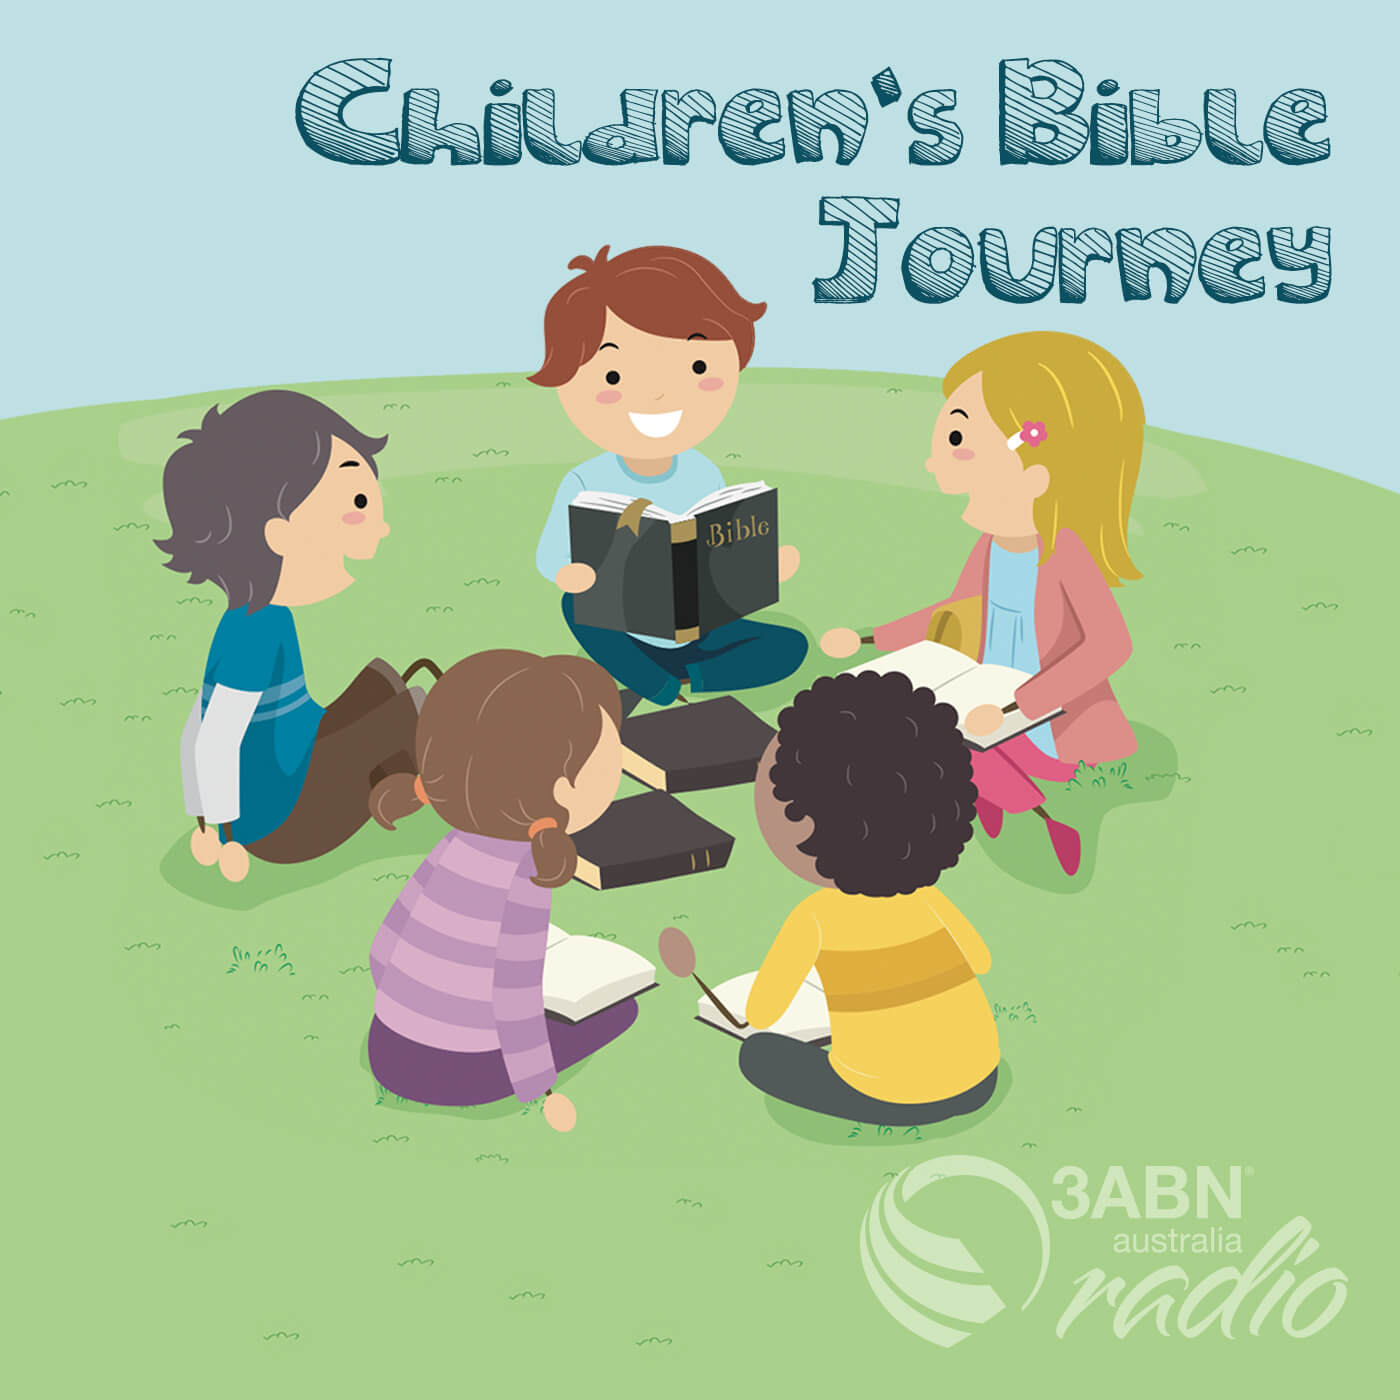 Children's Bible Journey - 2207